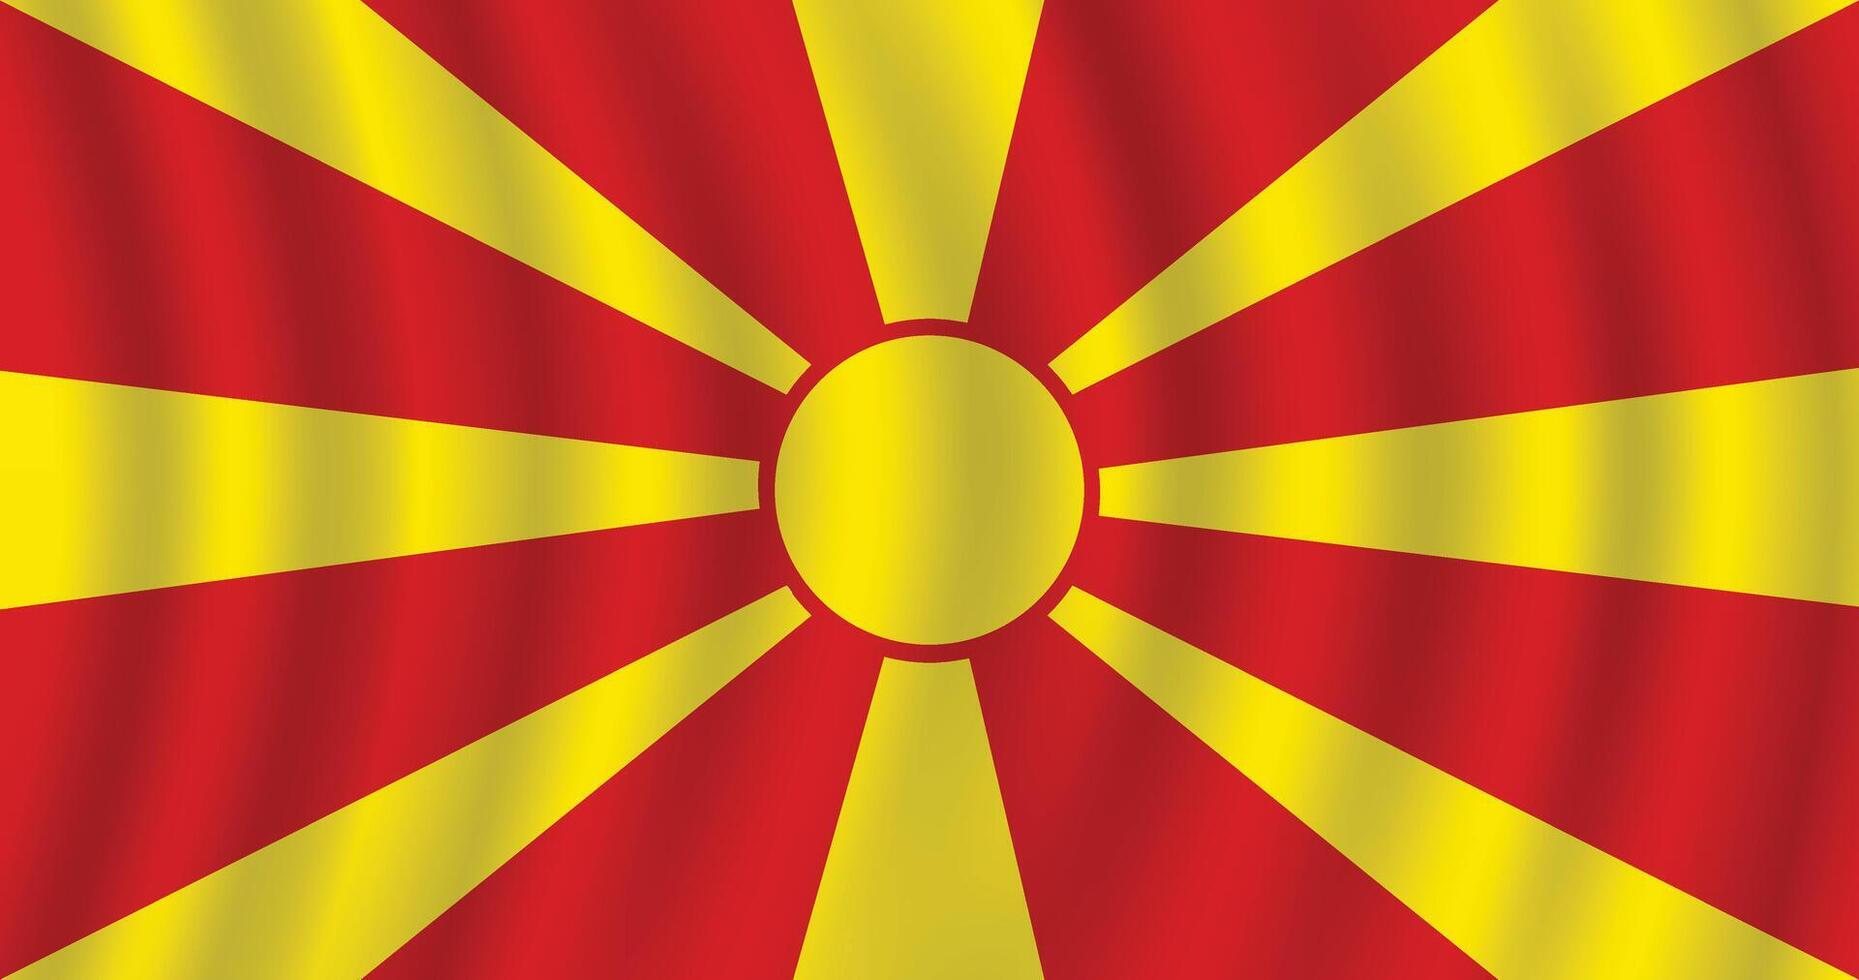 Flat Illustration of North Macedonia national flag. North Macedonia flag design. North Macedonia Wave flag. vector